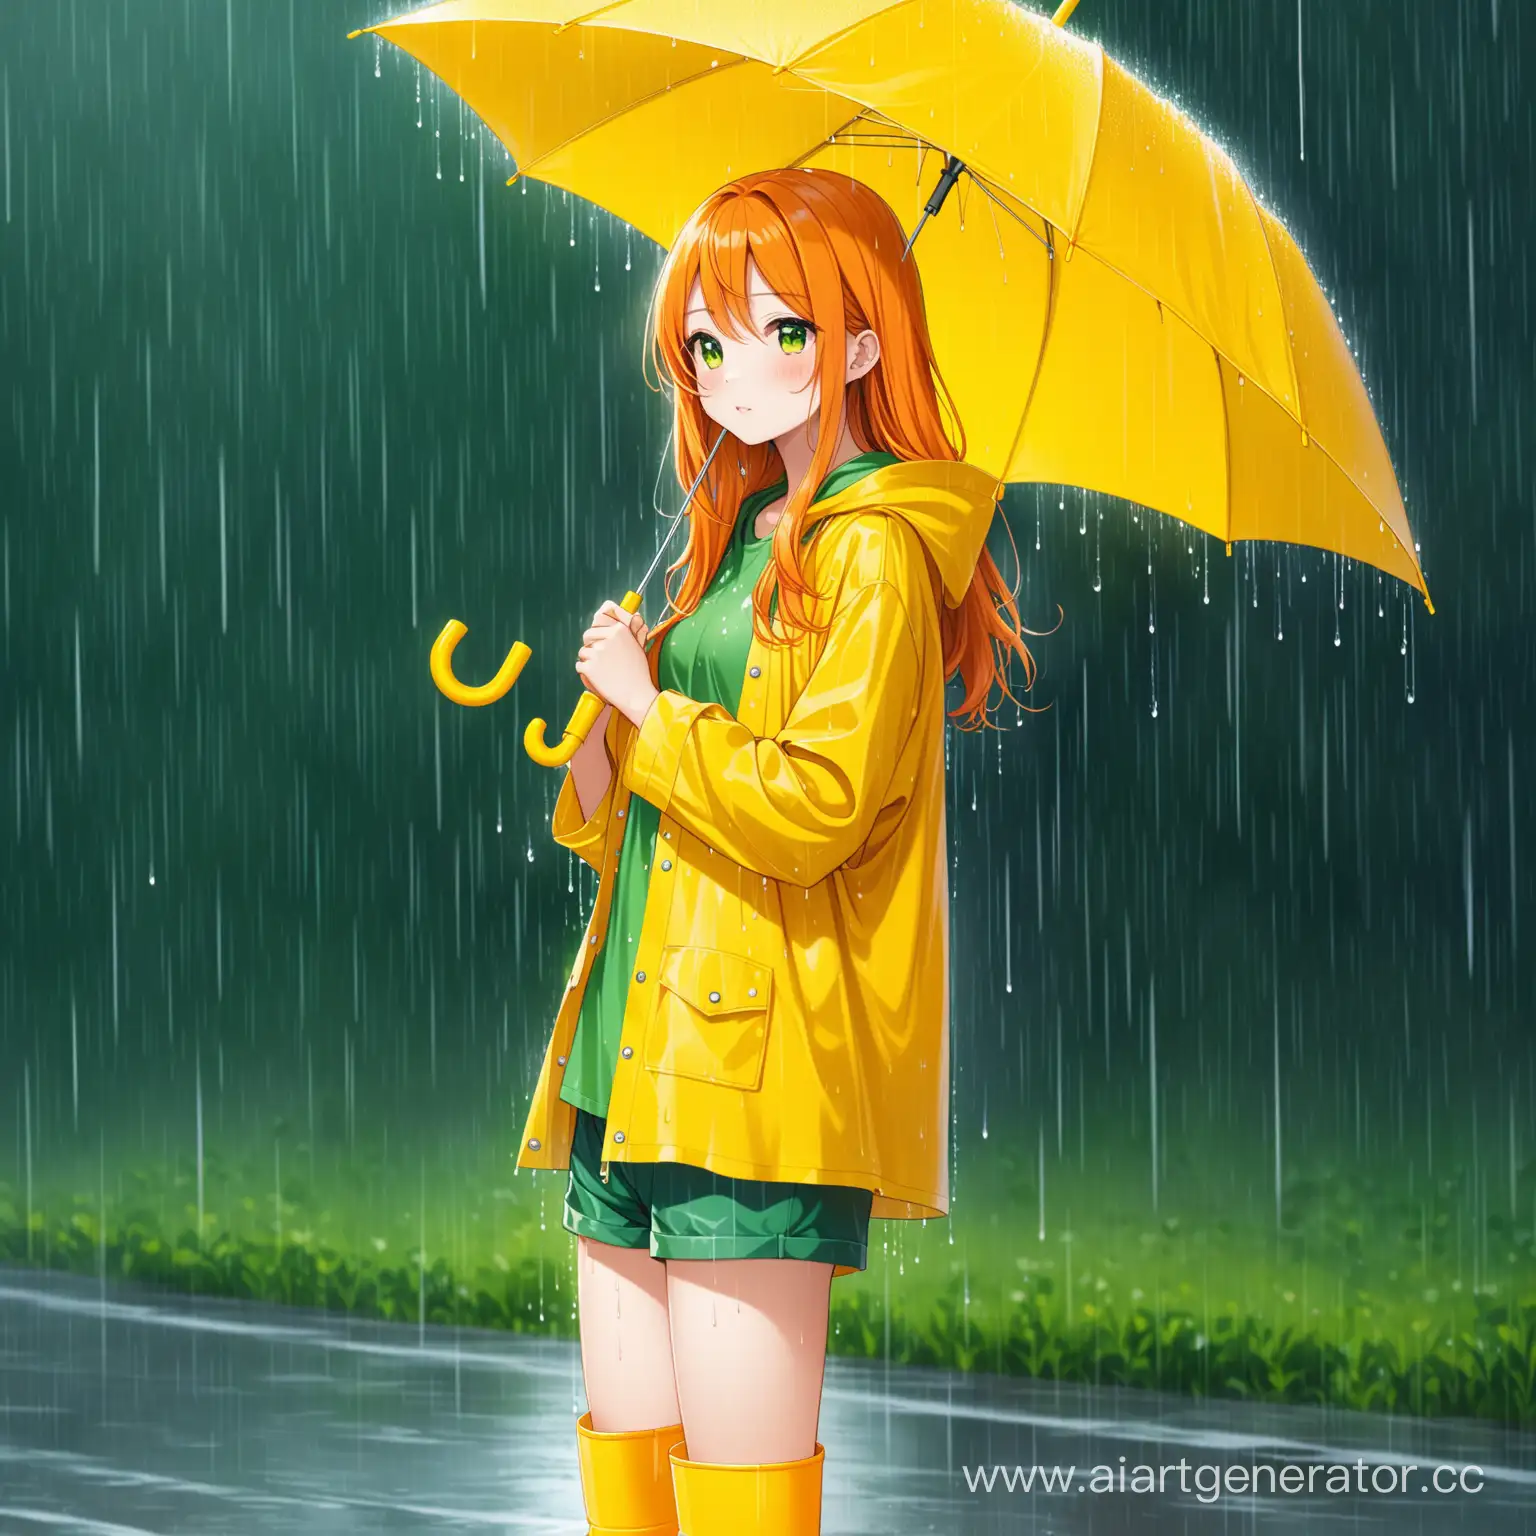 Cheerful-Girl-with-Orange-Hair-in-Rainy-Weather